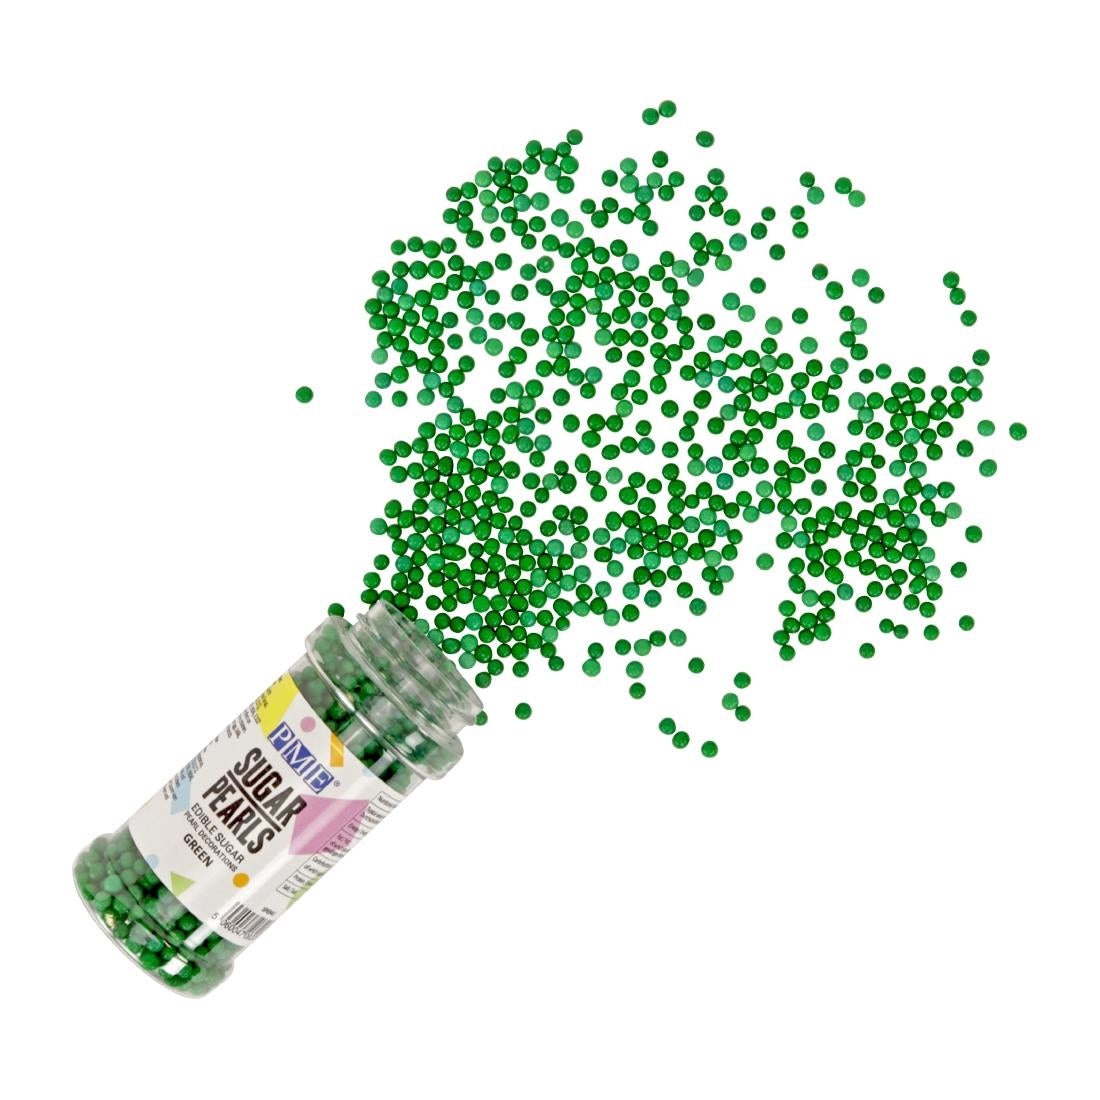 HU211 PME Sugar Pearls 100g - Green